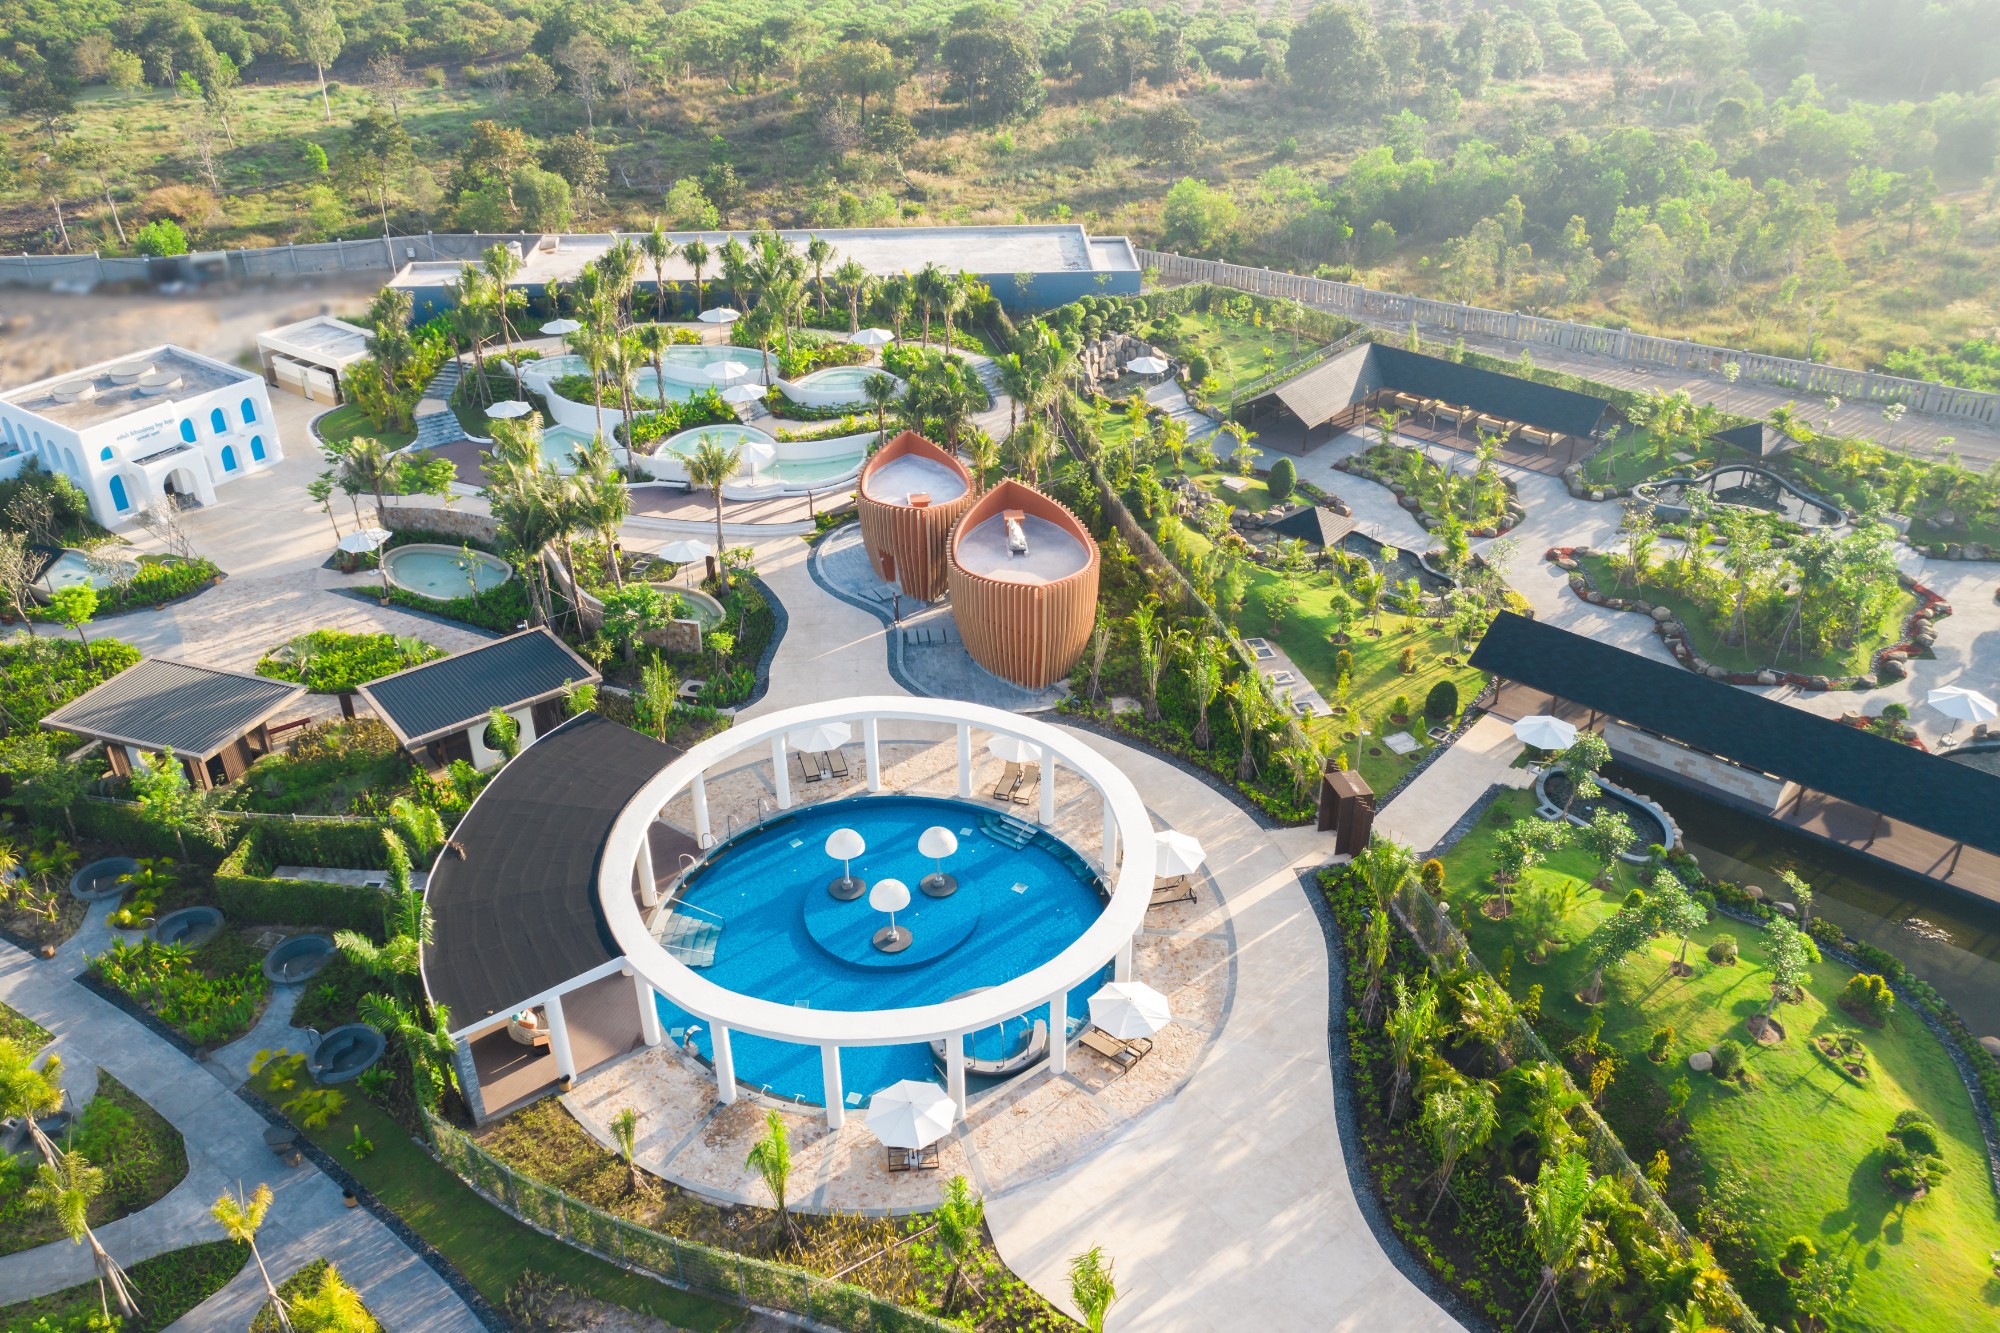 Minera Bình Châu Hot Spring resort